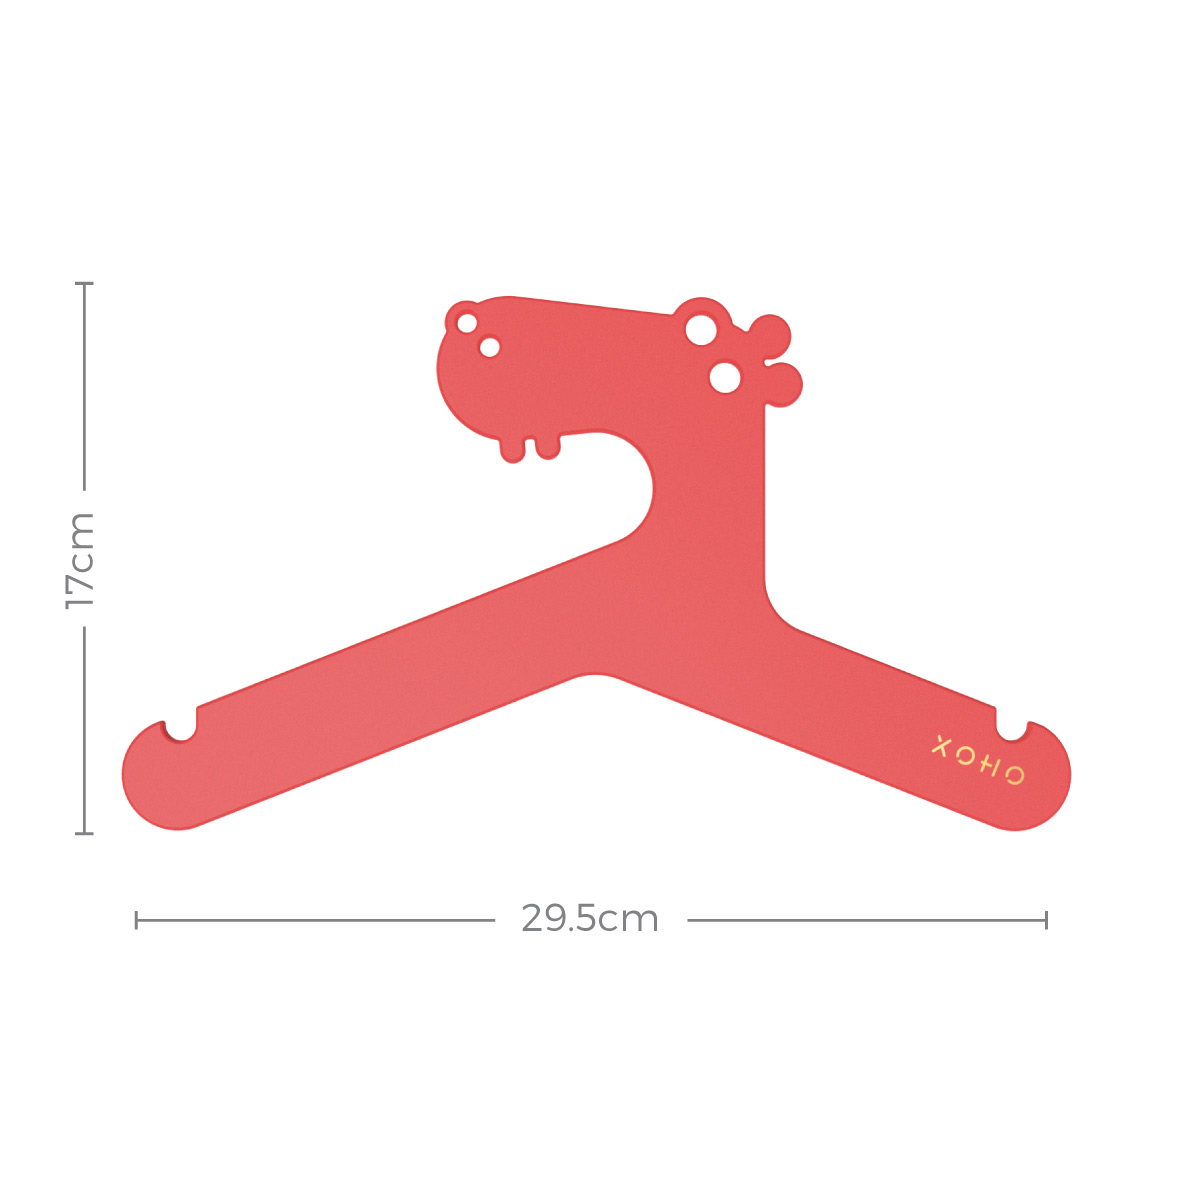 designer Kids hanger red hippo dimensions